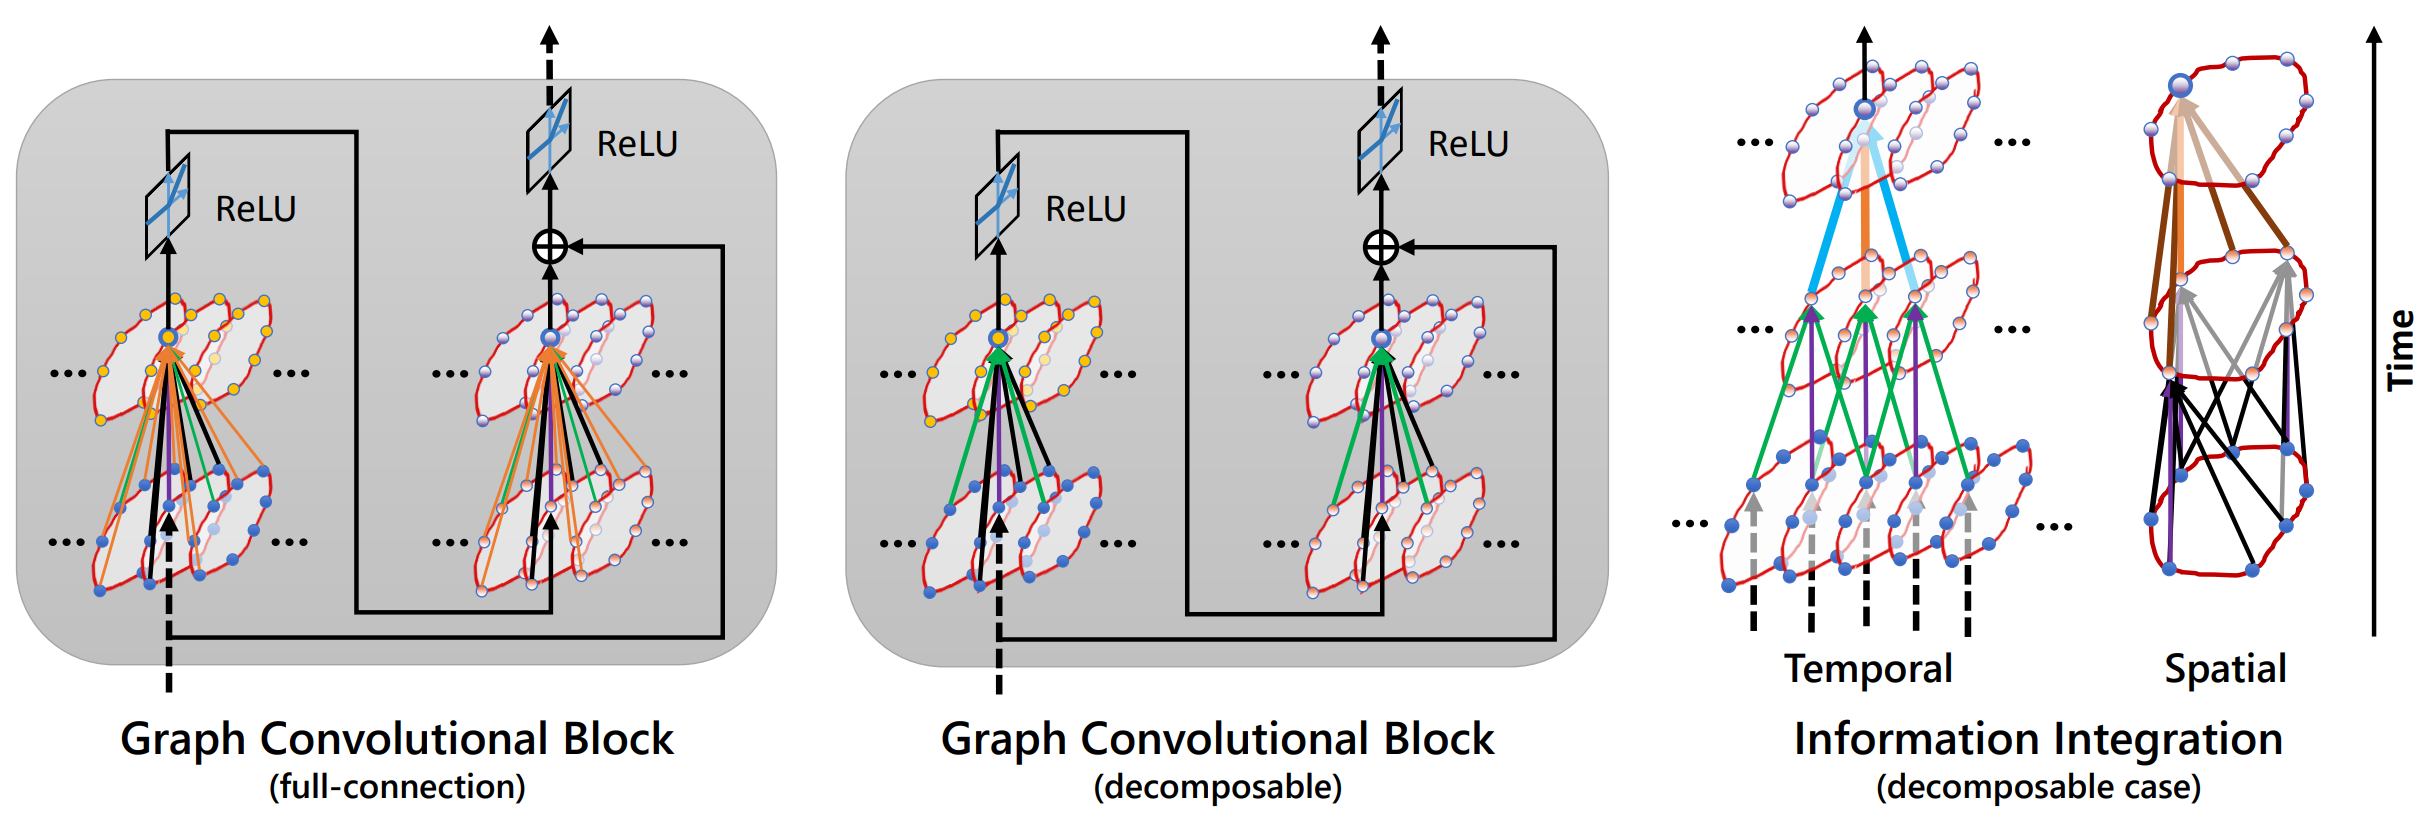 graph convolutional block